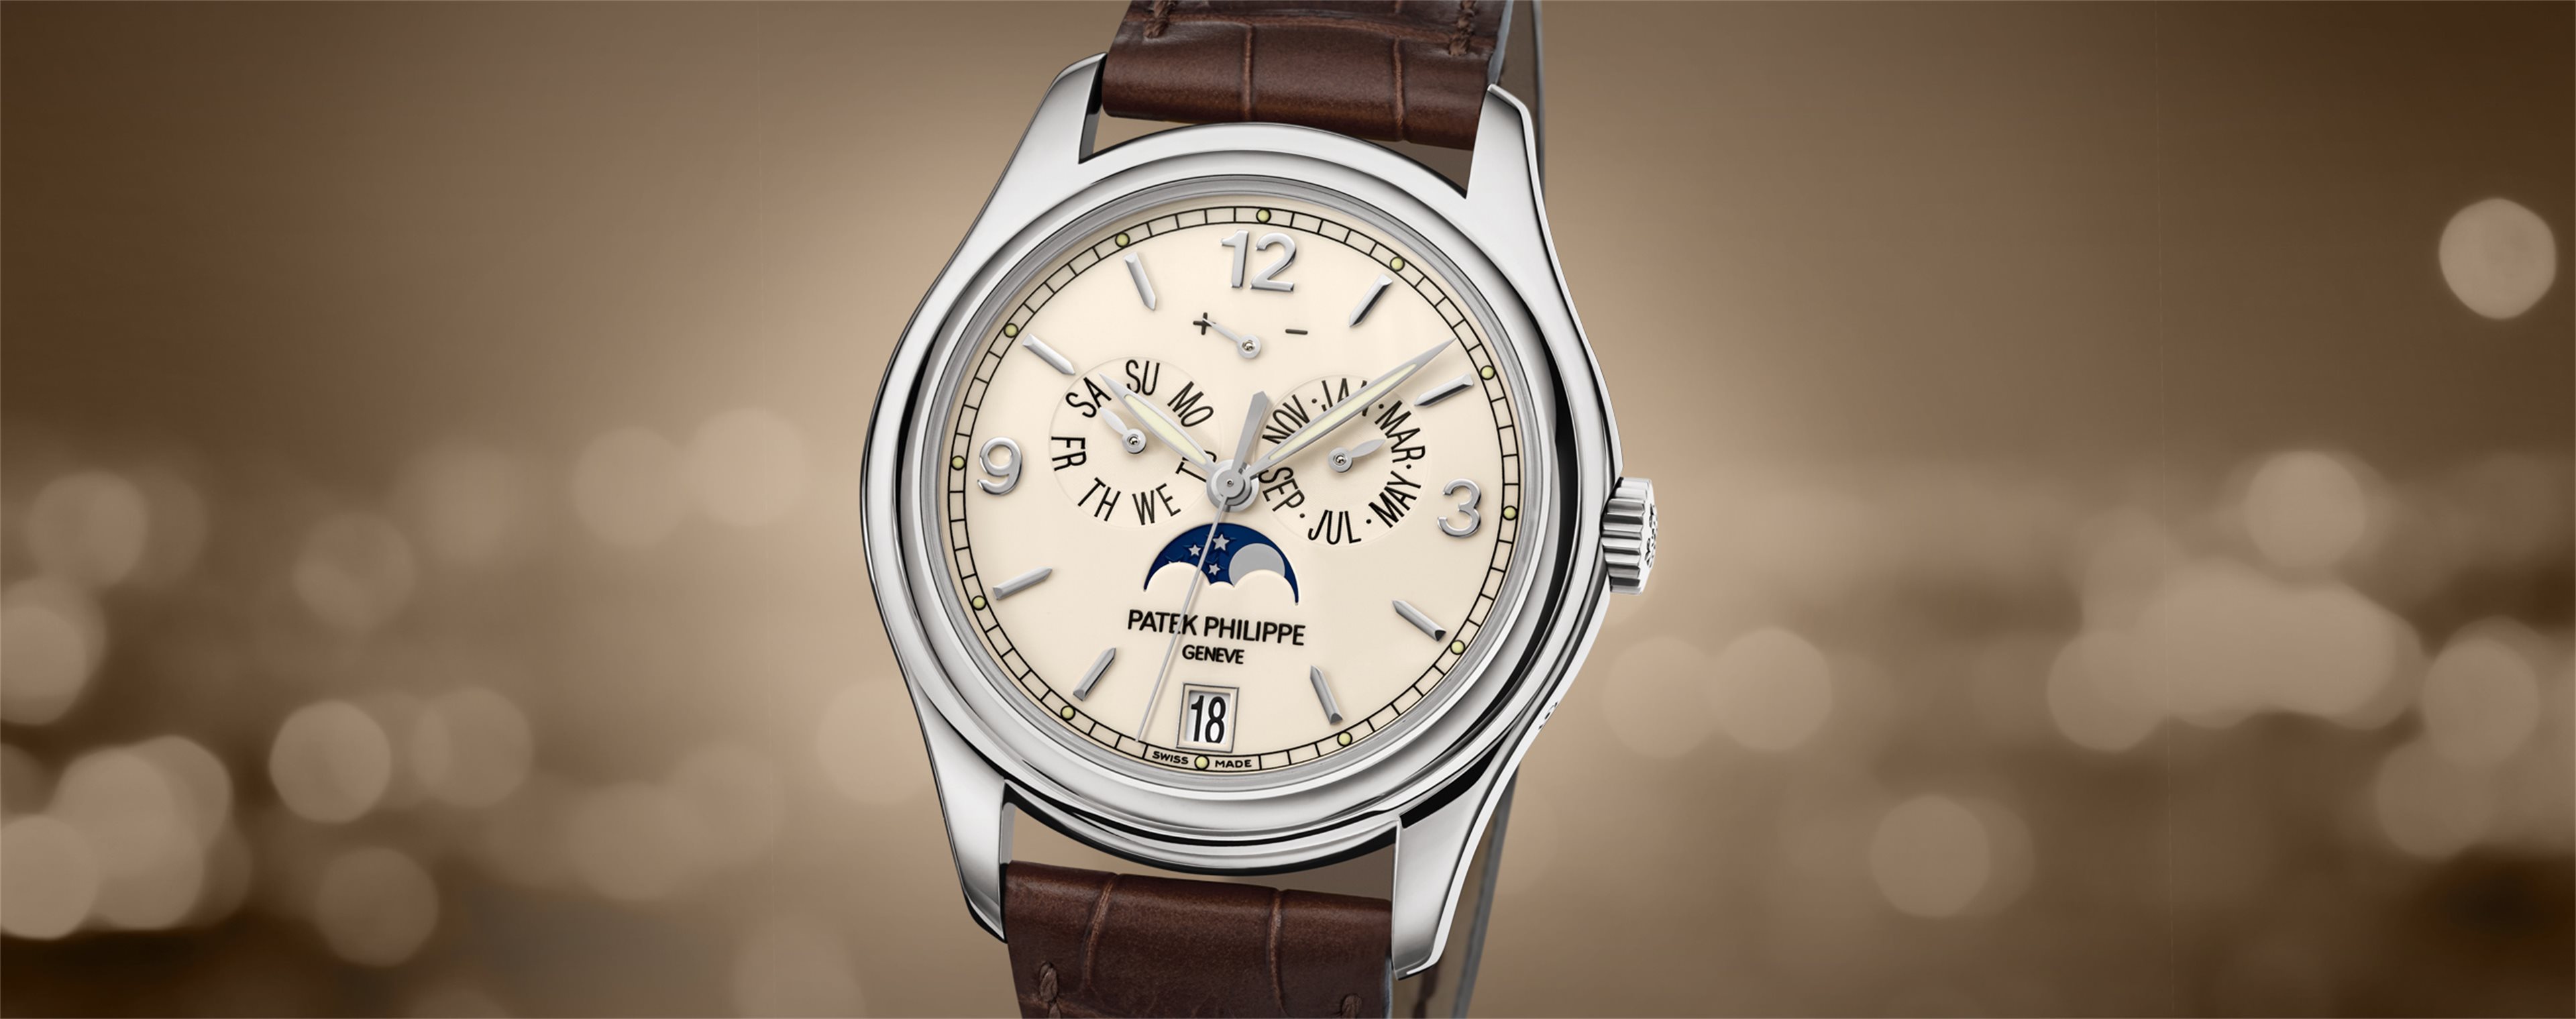 Rolex Watches Replica Amazon